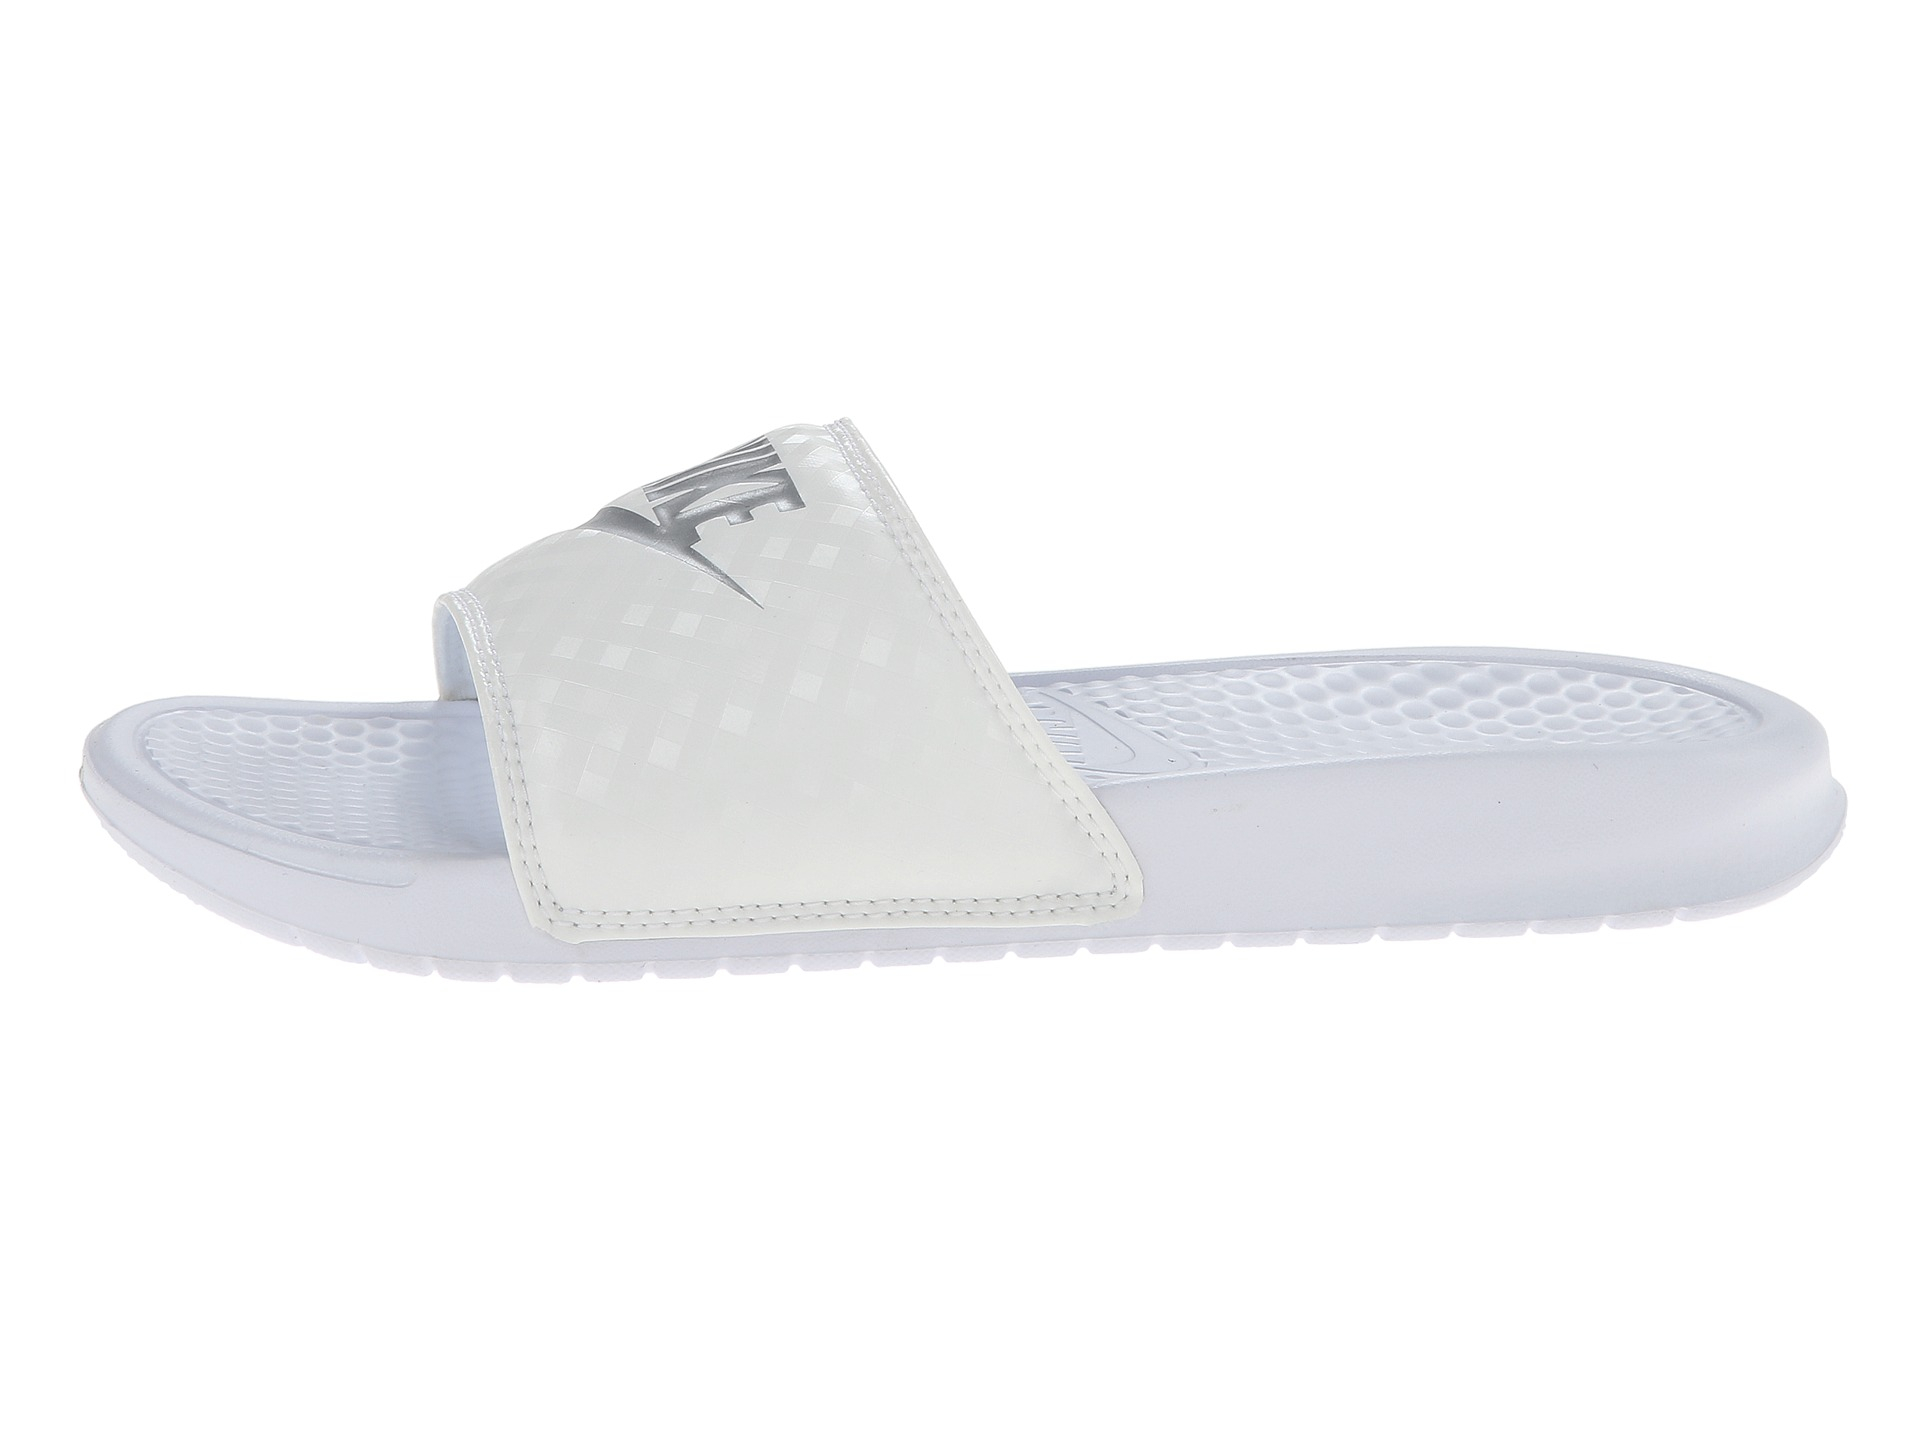 Nike Benassi Jdi Slide in White (White-Metallic Silver) | Lyst